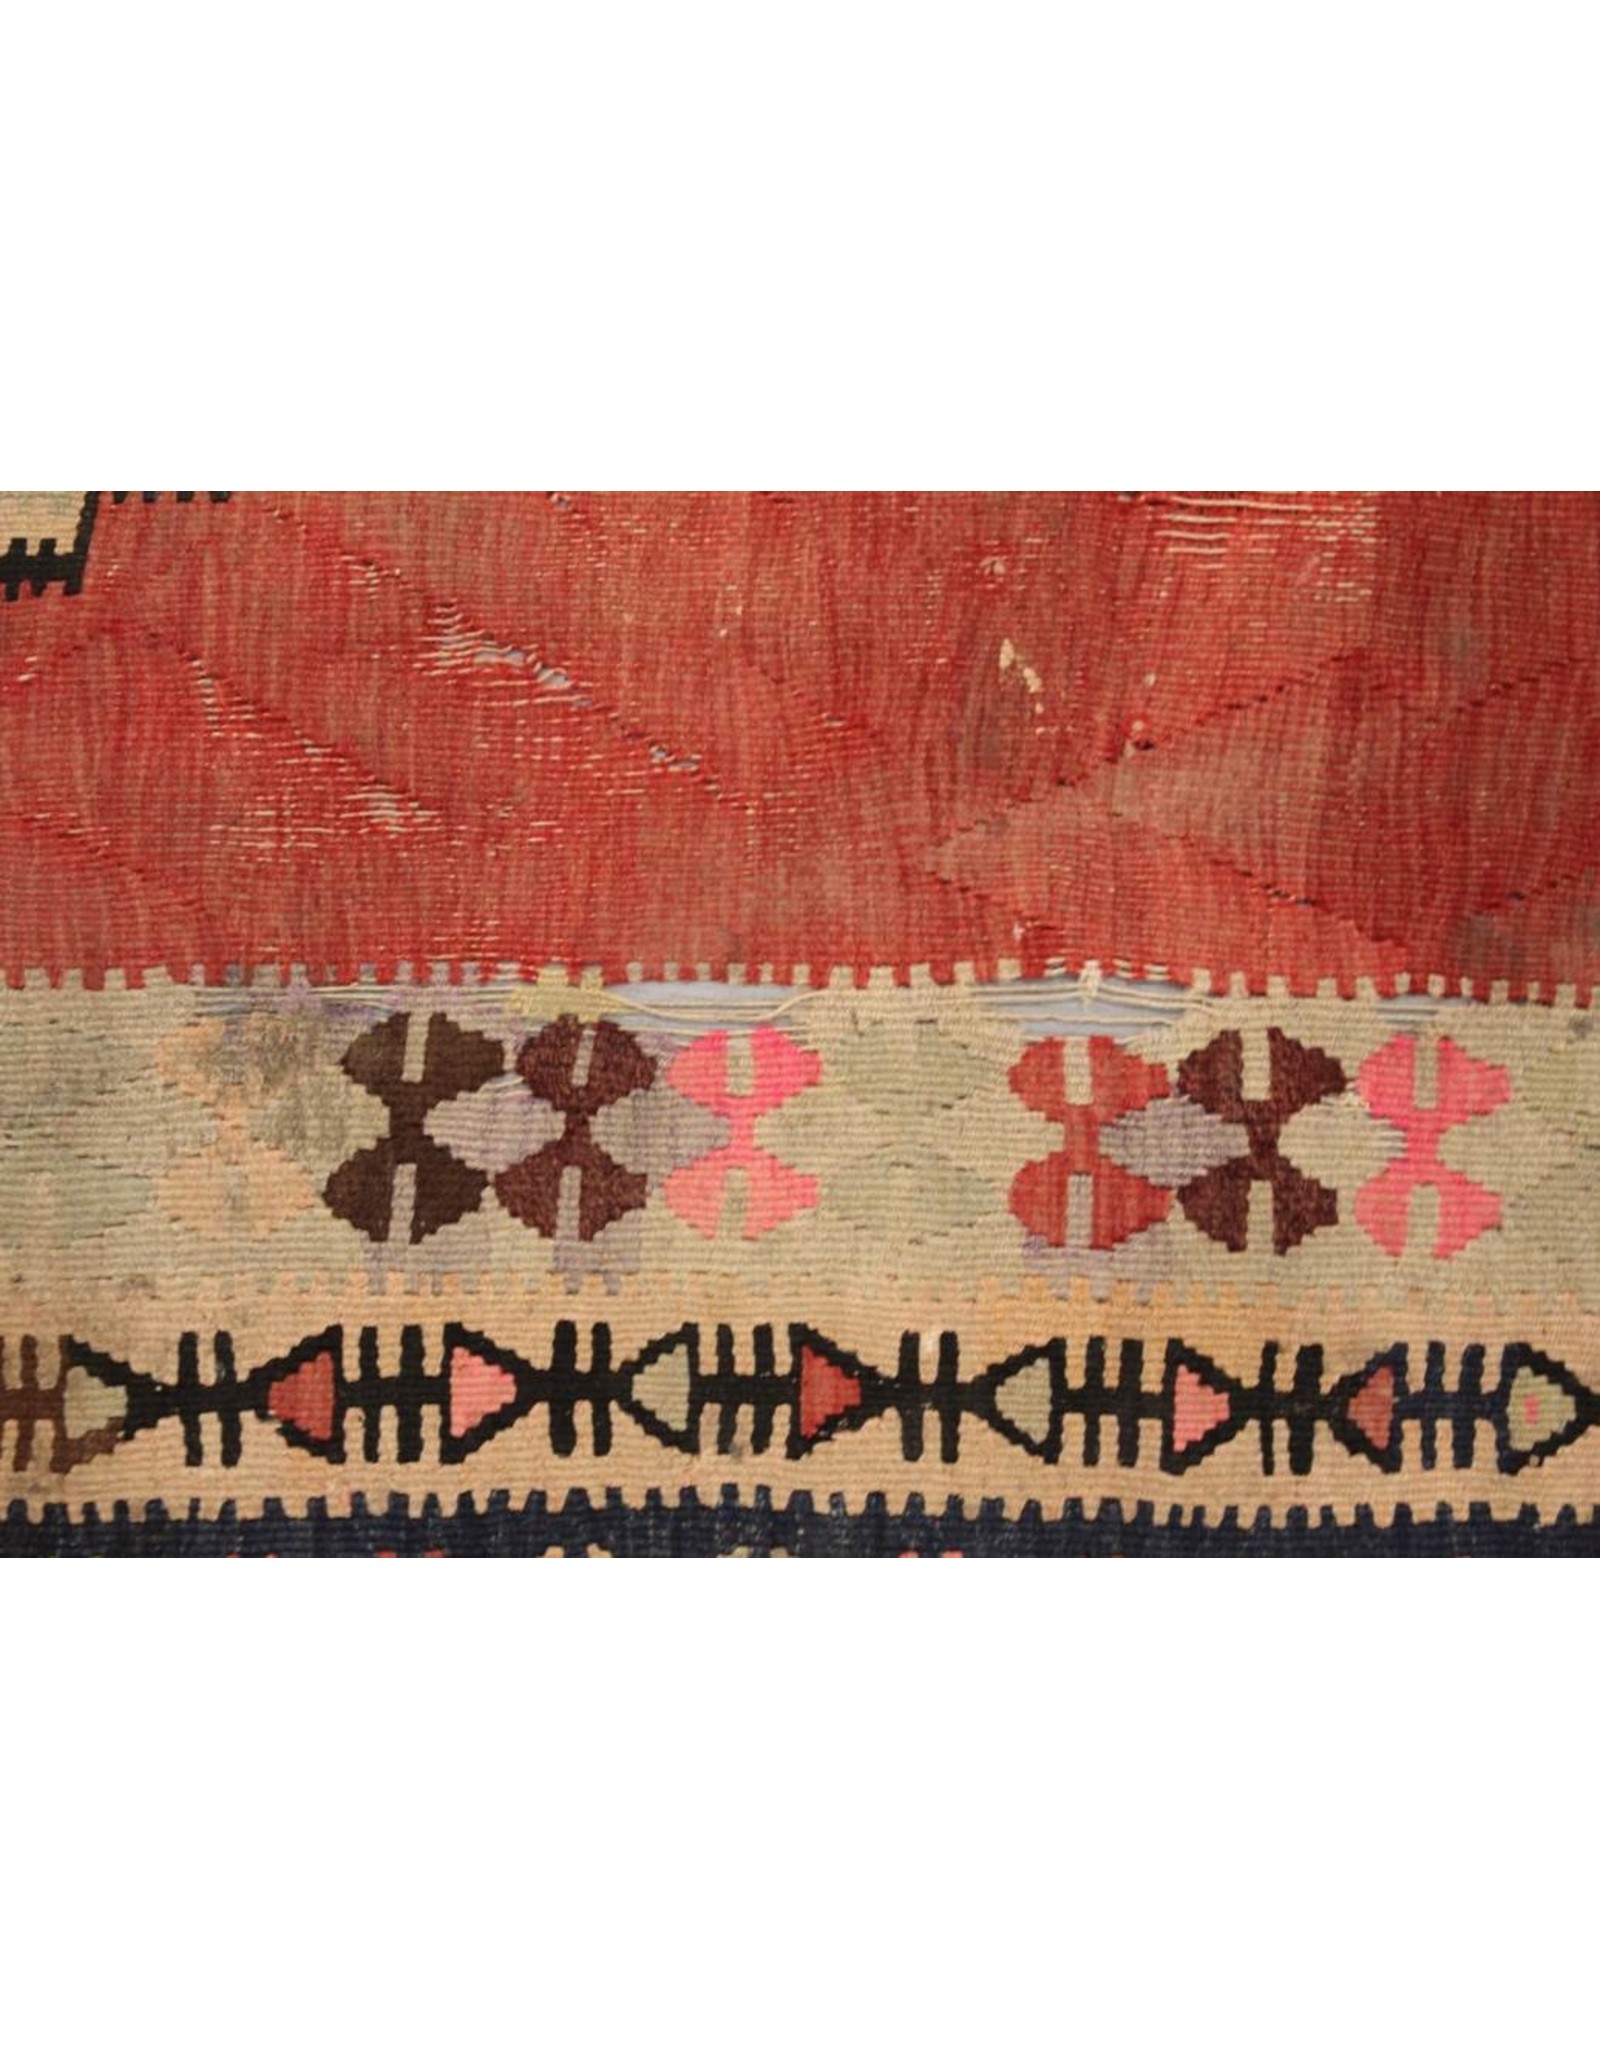 Carpet - 5'4" x 10', flat weave, predominantly red